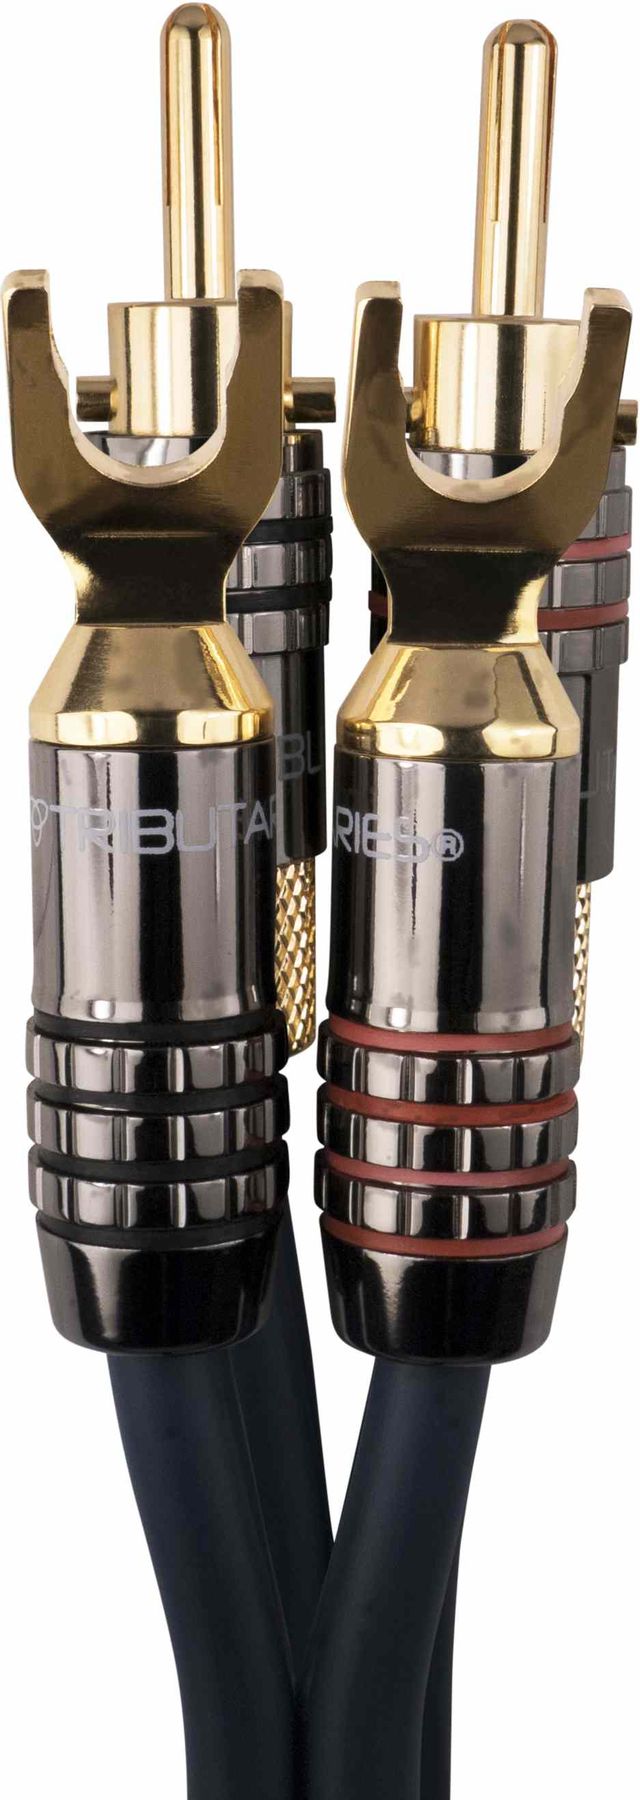 Tributaries® Serires 8 6 Ft. Banana Plugs/Spade Lugs Speaker Cable